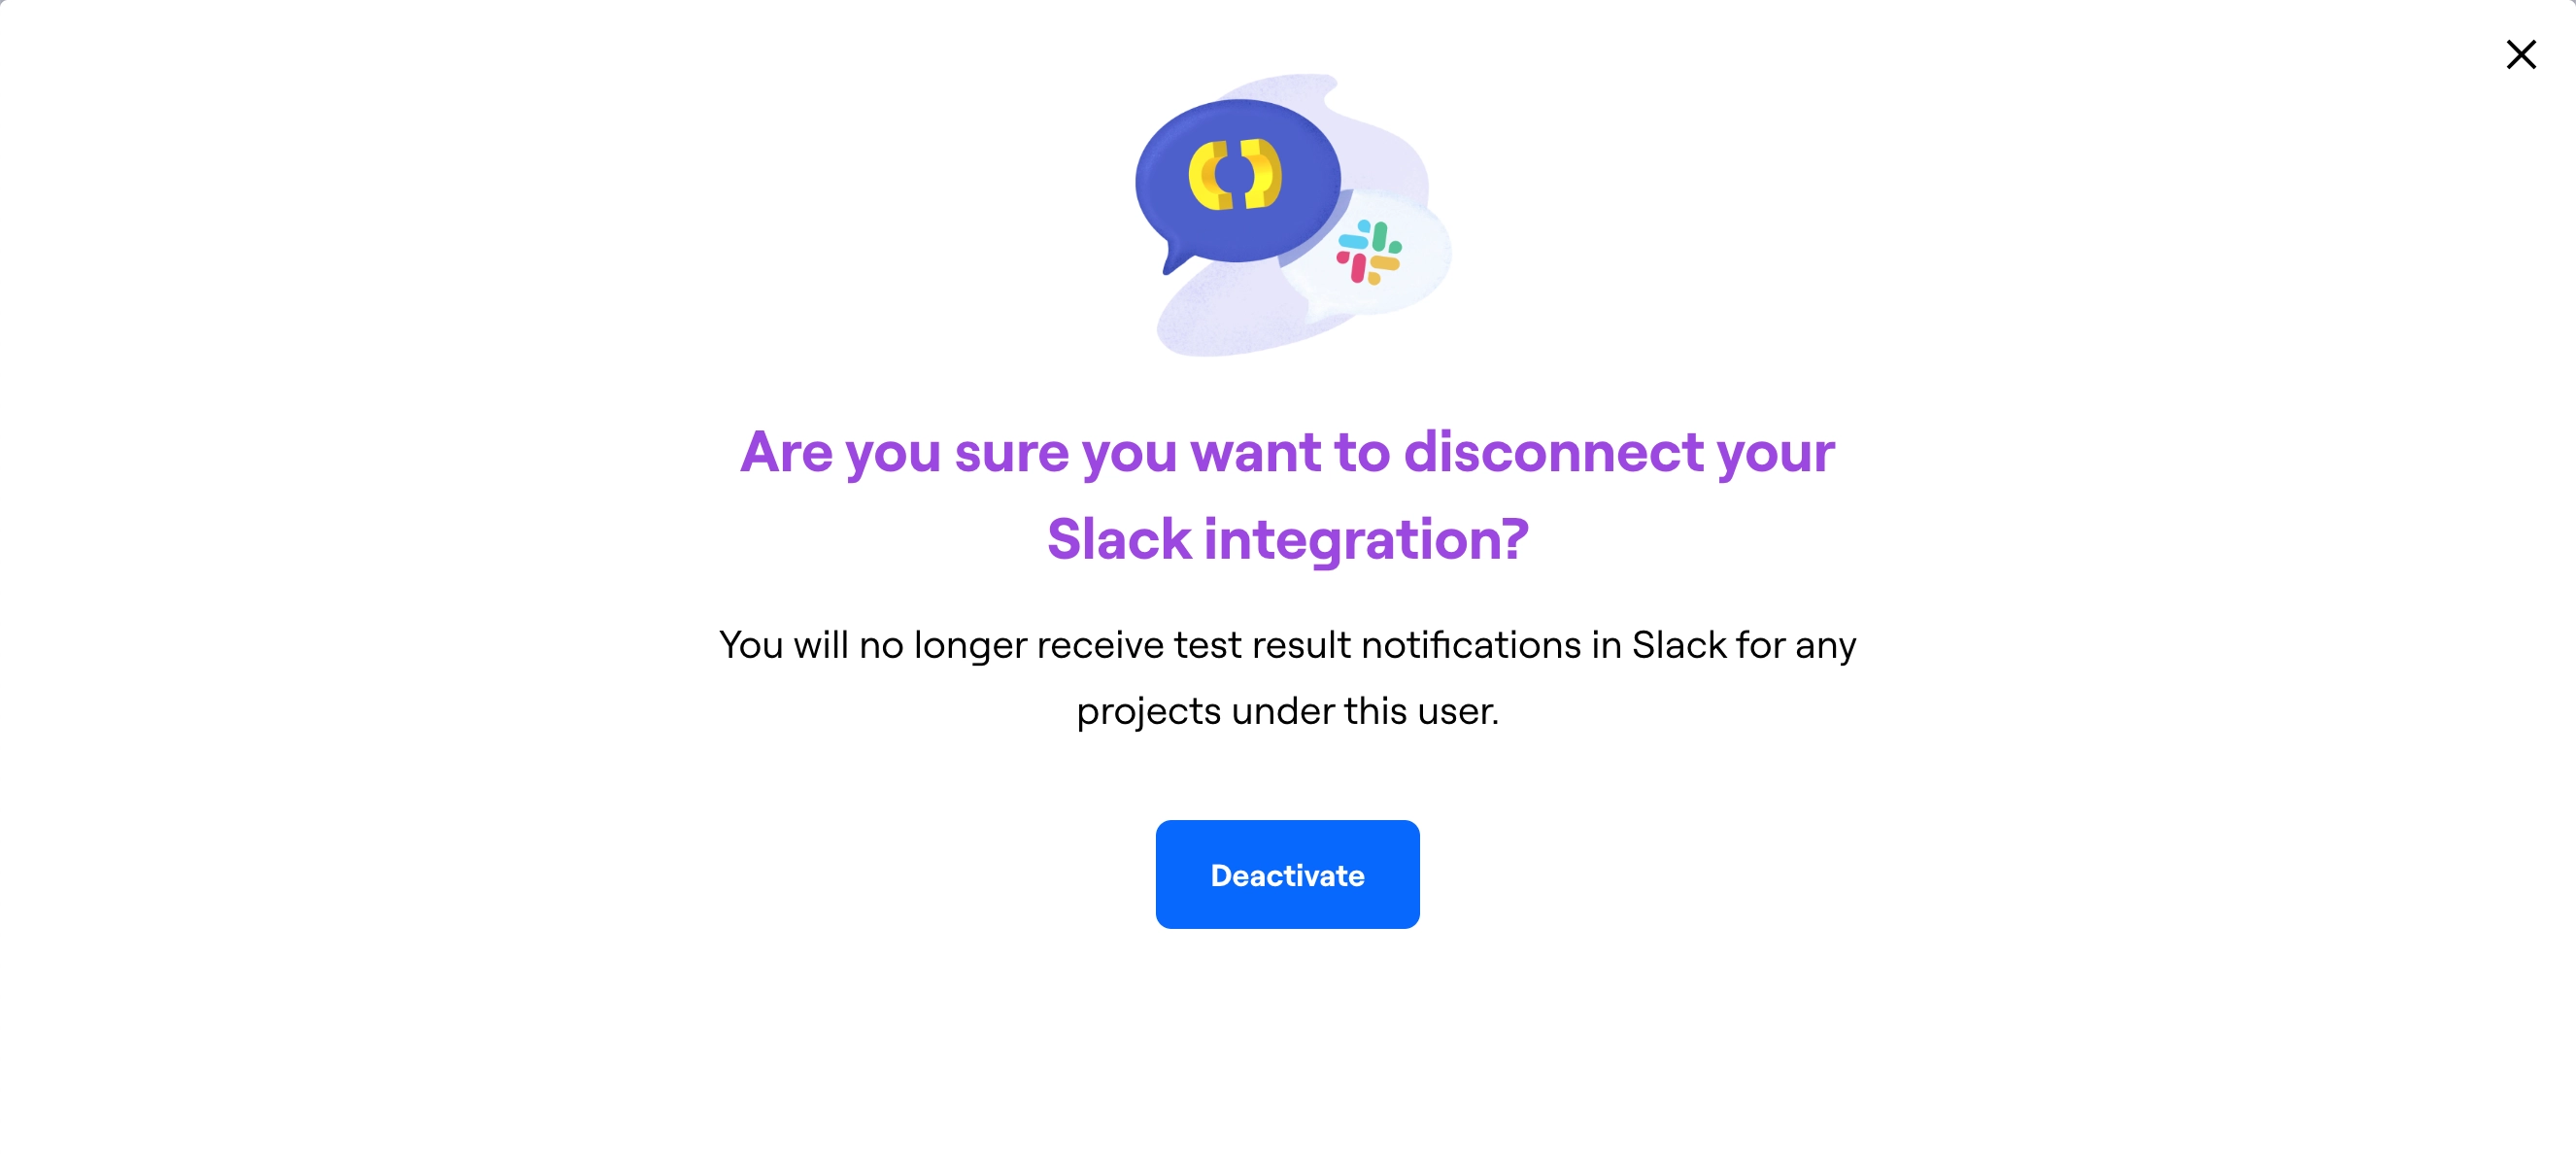 maze-team-settings-integrations-slack-disconnect-confirm.webp